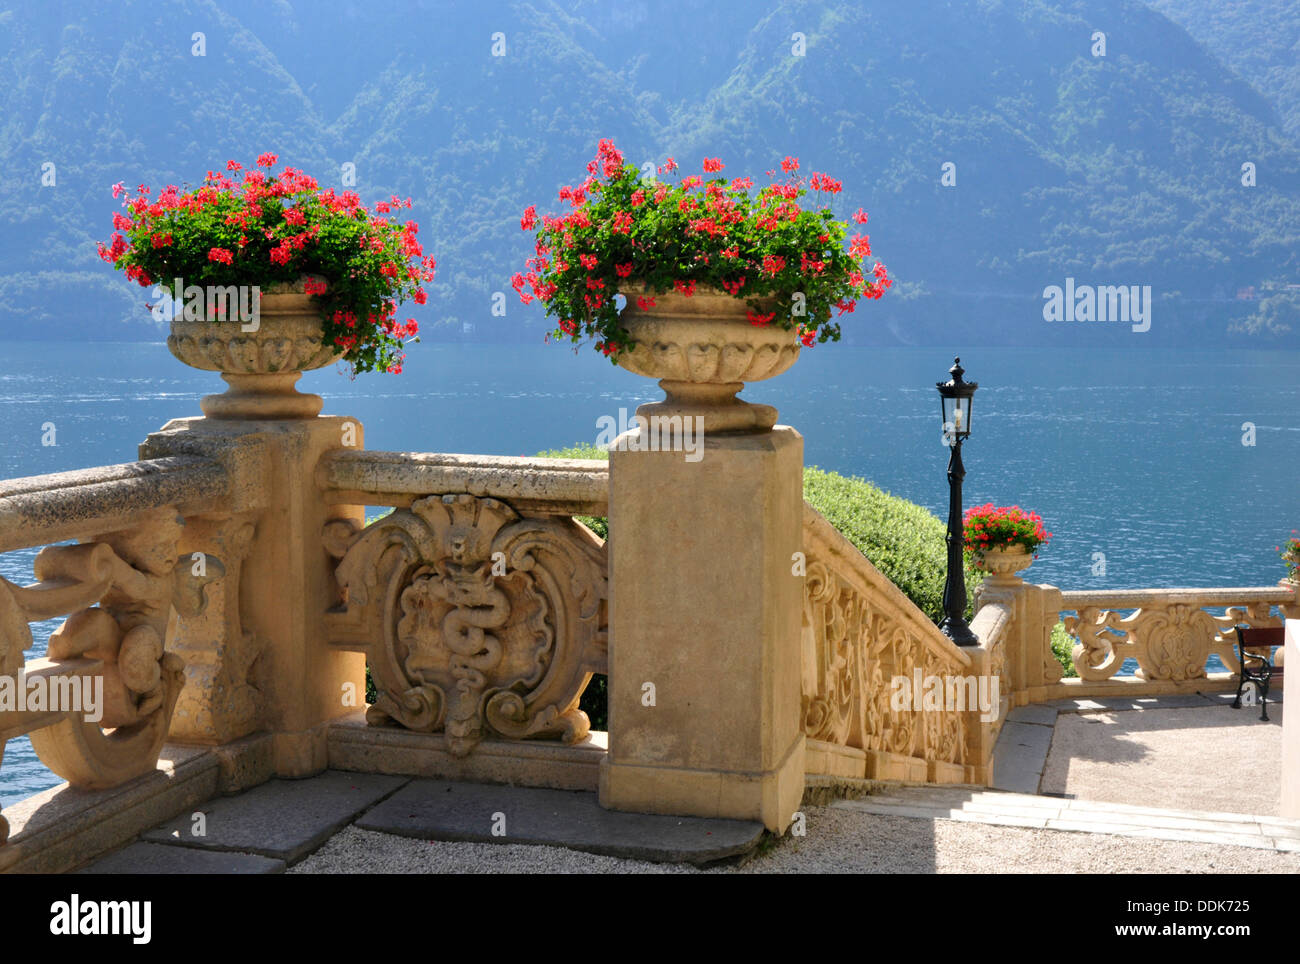 Italy - Lake Como - Lenno - Villa Balbianello - terrrace - decorative  carved balustrade - ornamental  flowers  - lake backdrop Stock Photo